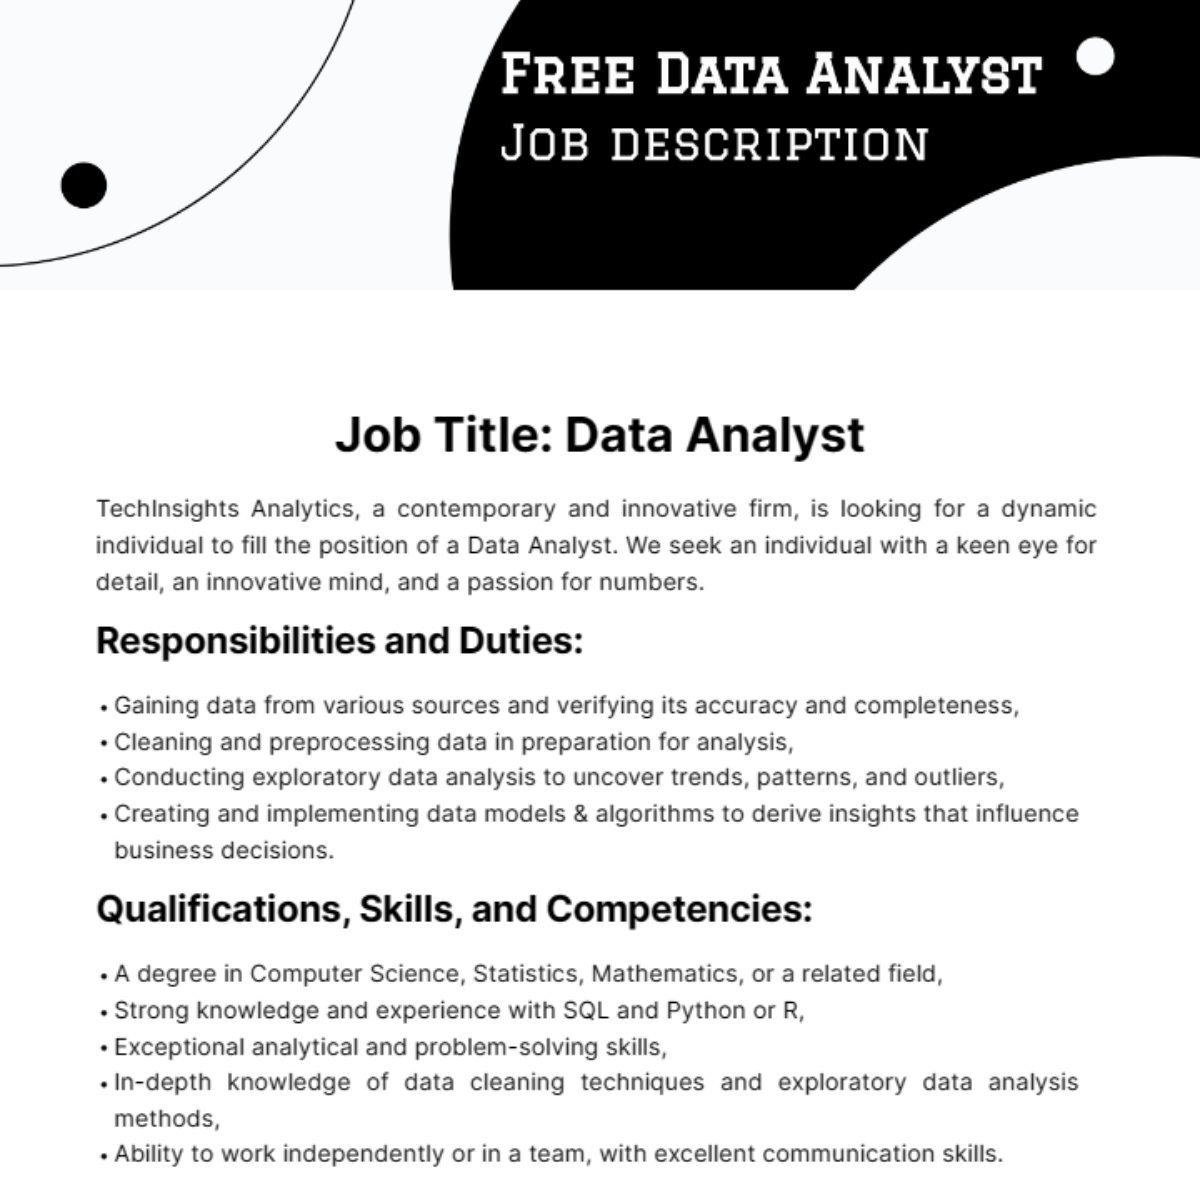 Free Data Analyst Job Description Template